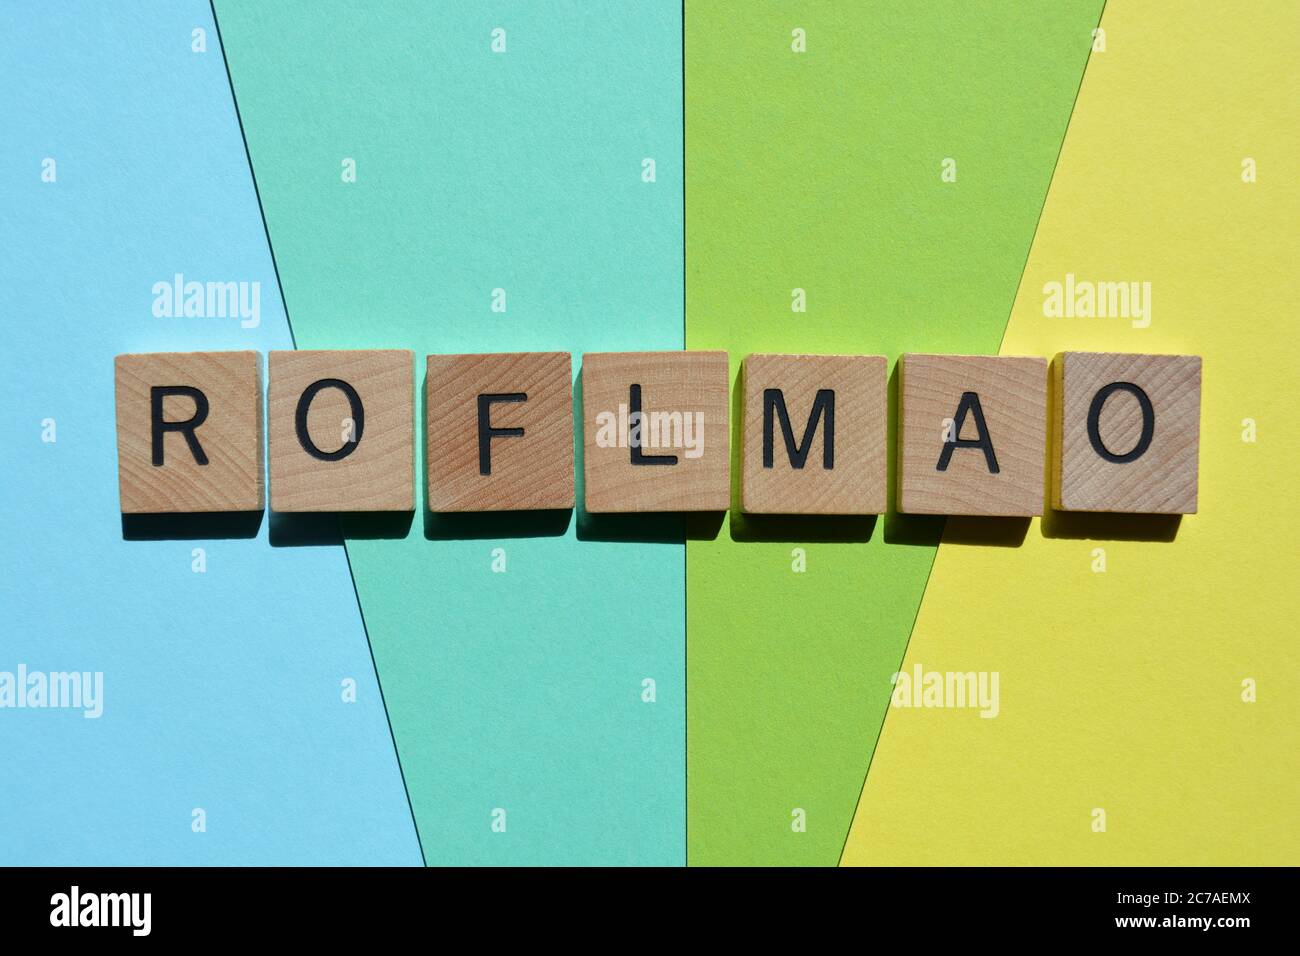 Acronym, Internet slang, combination of ROFL and LMAO Stock Photo - Alamy